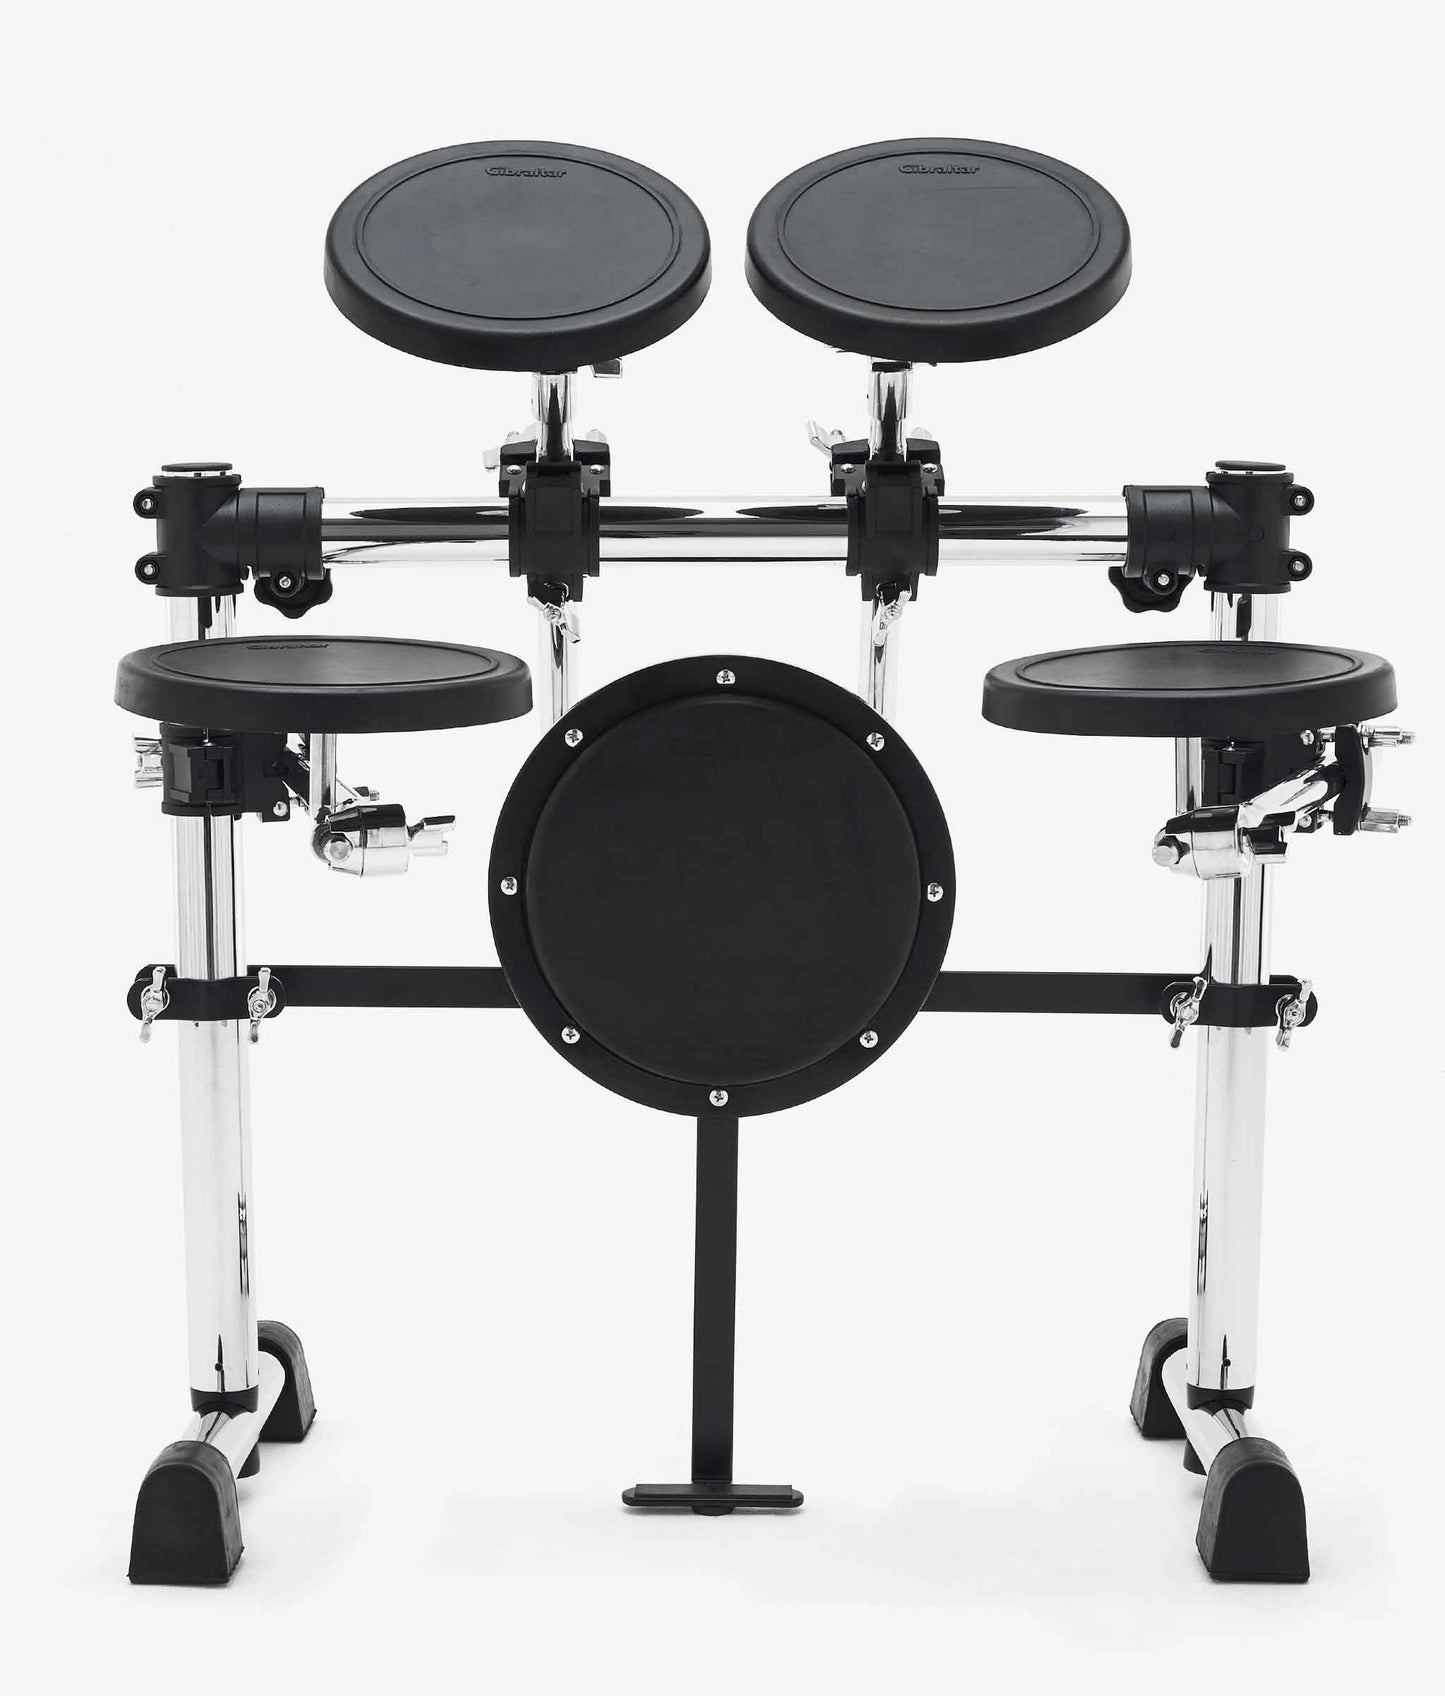  Gibraltar GPO8 5 Piece Practice Drum Kit drum practice pads